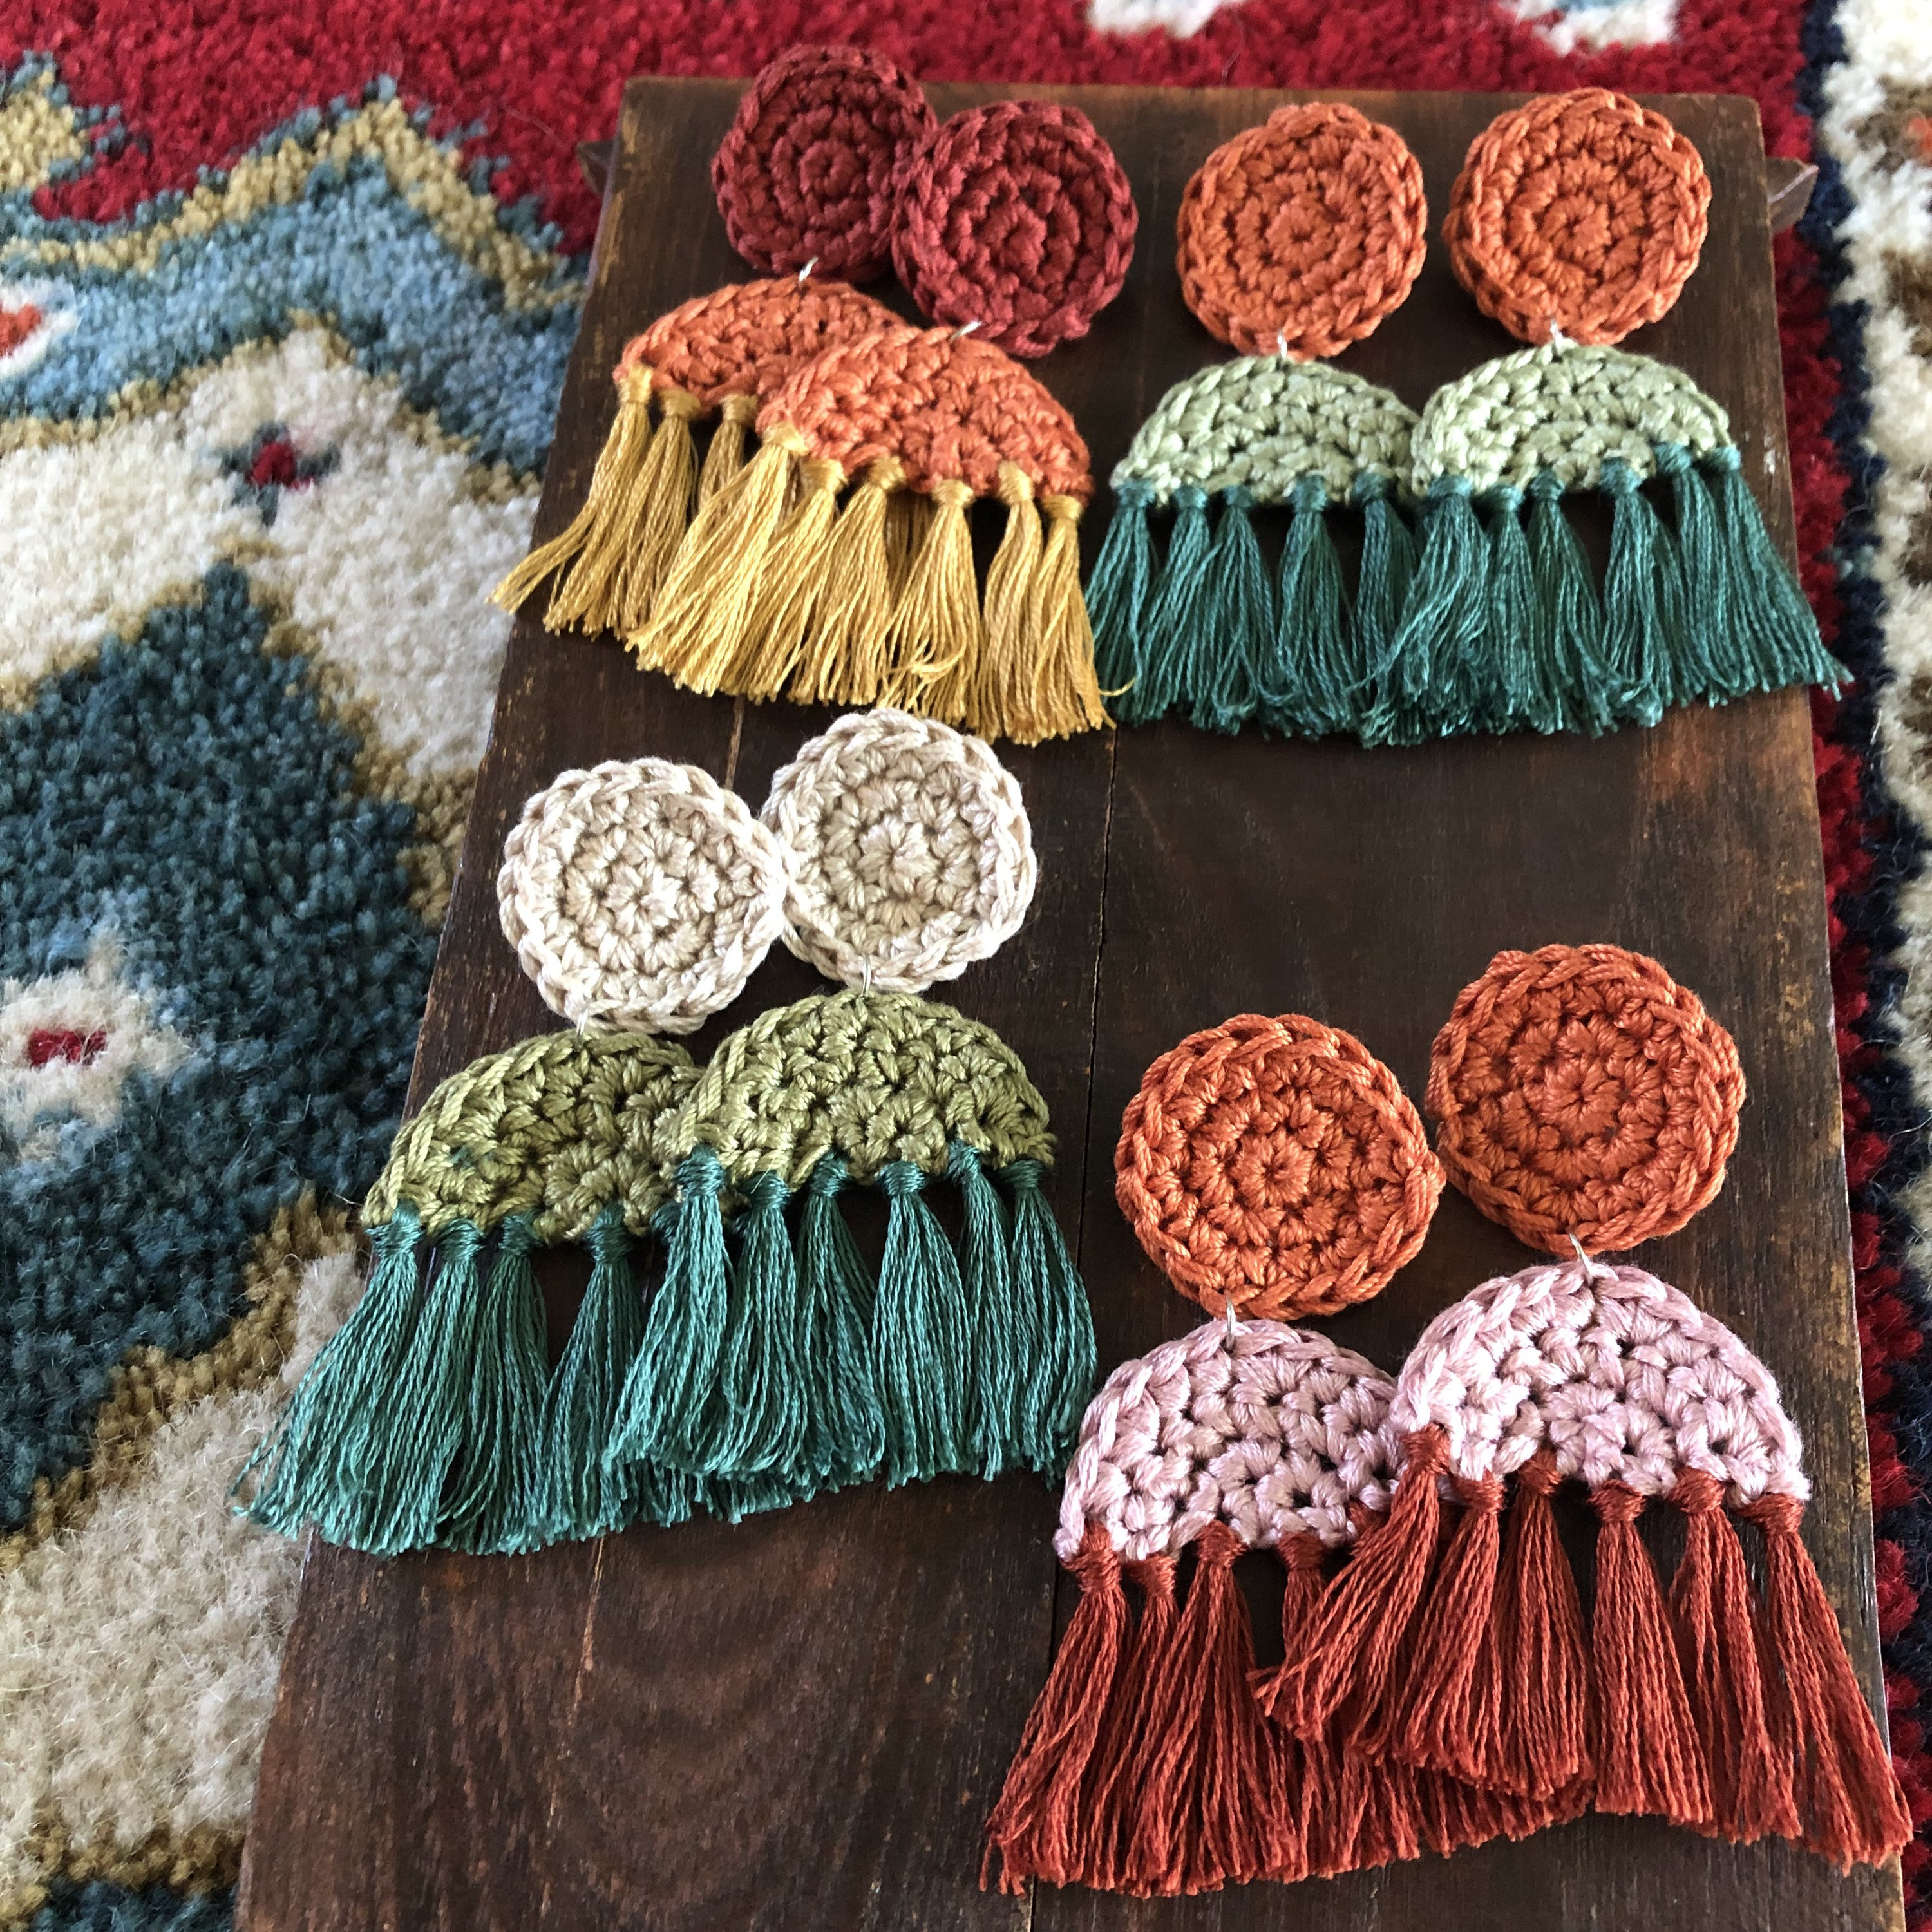 Stacked Semicircle Crochet Earrings